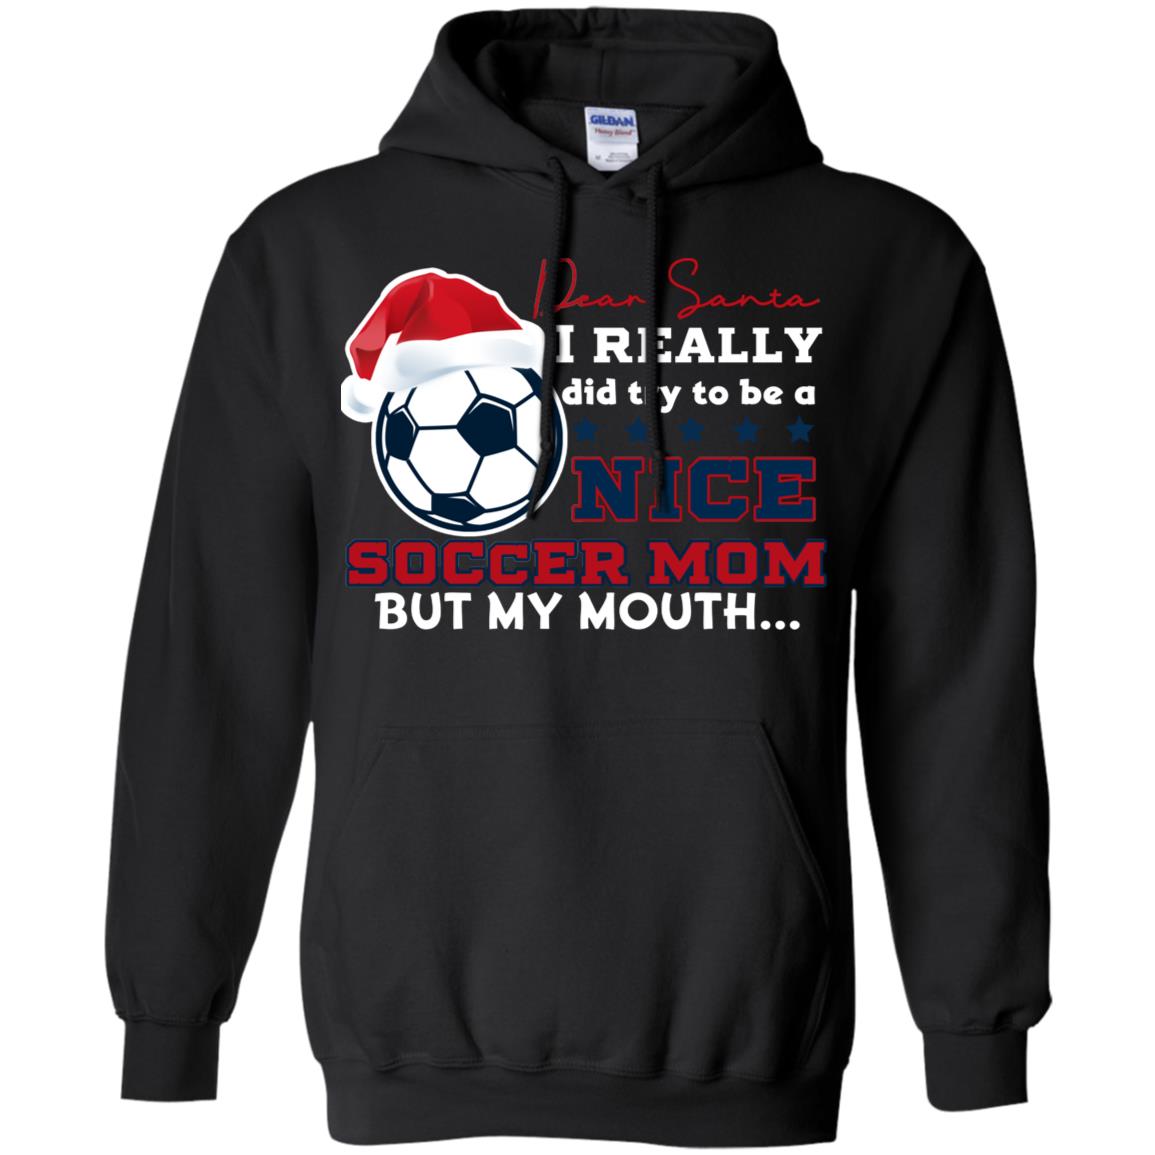 Dear Santa I Really Try Be A Good Soccer Mom But My Mouth Funny X-mas Soccer Shirt For MommyG185 Gildan Pullover Hoodie 8 oz.